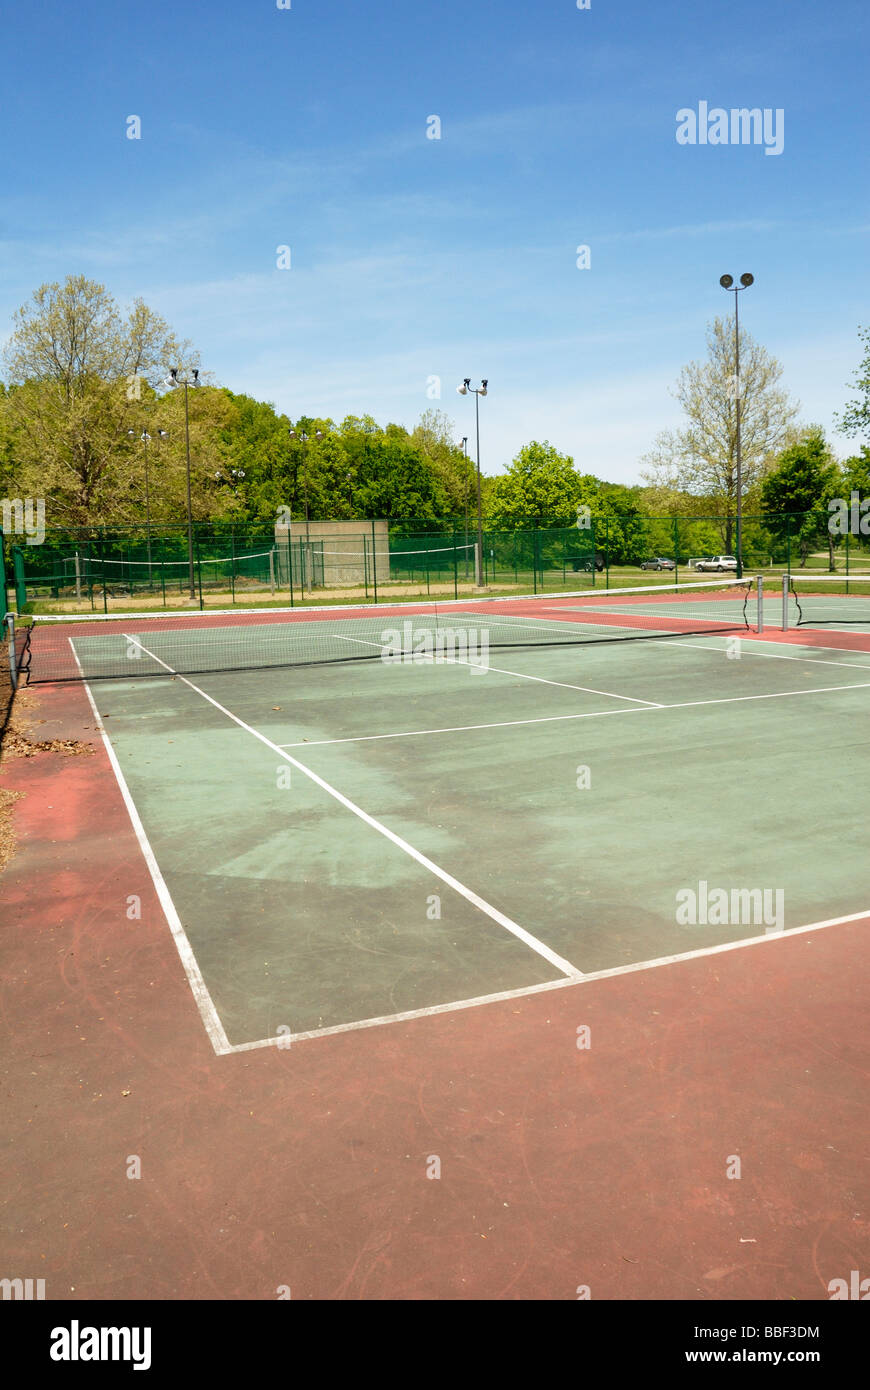 Tennis court at park Stock Photo